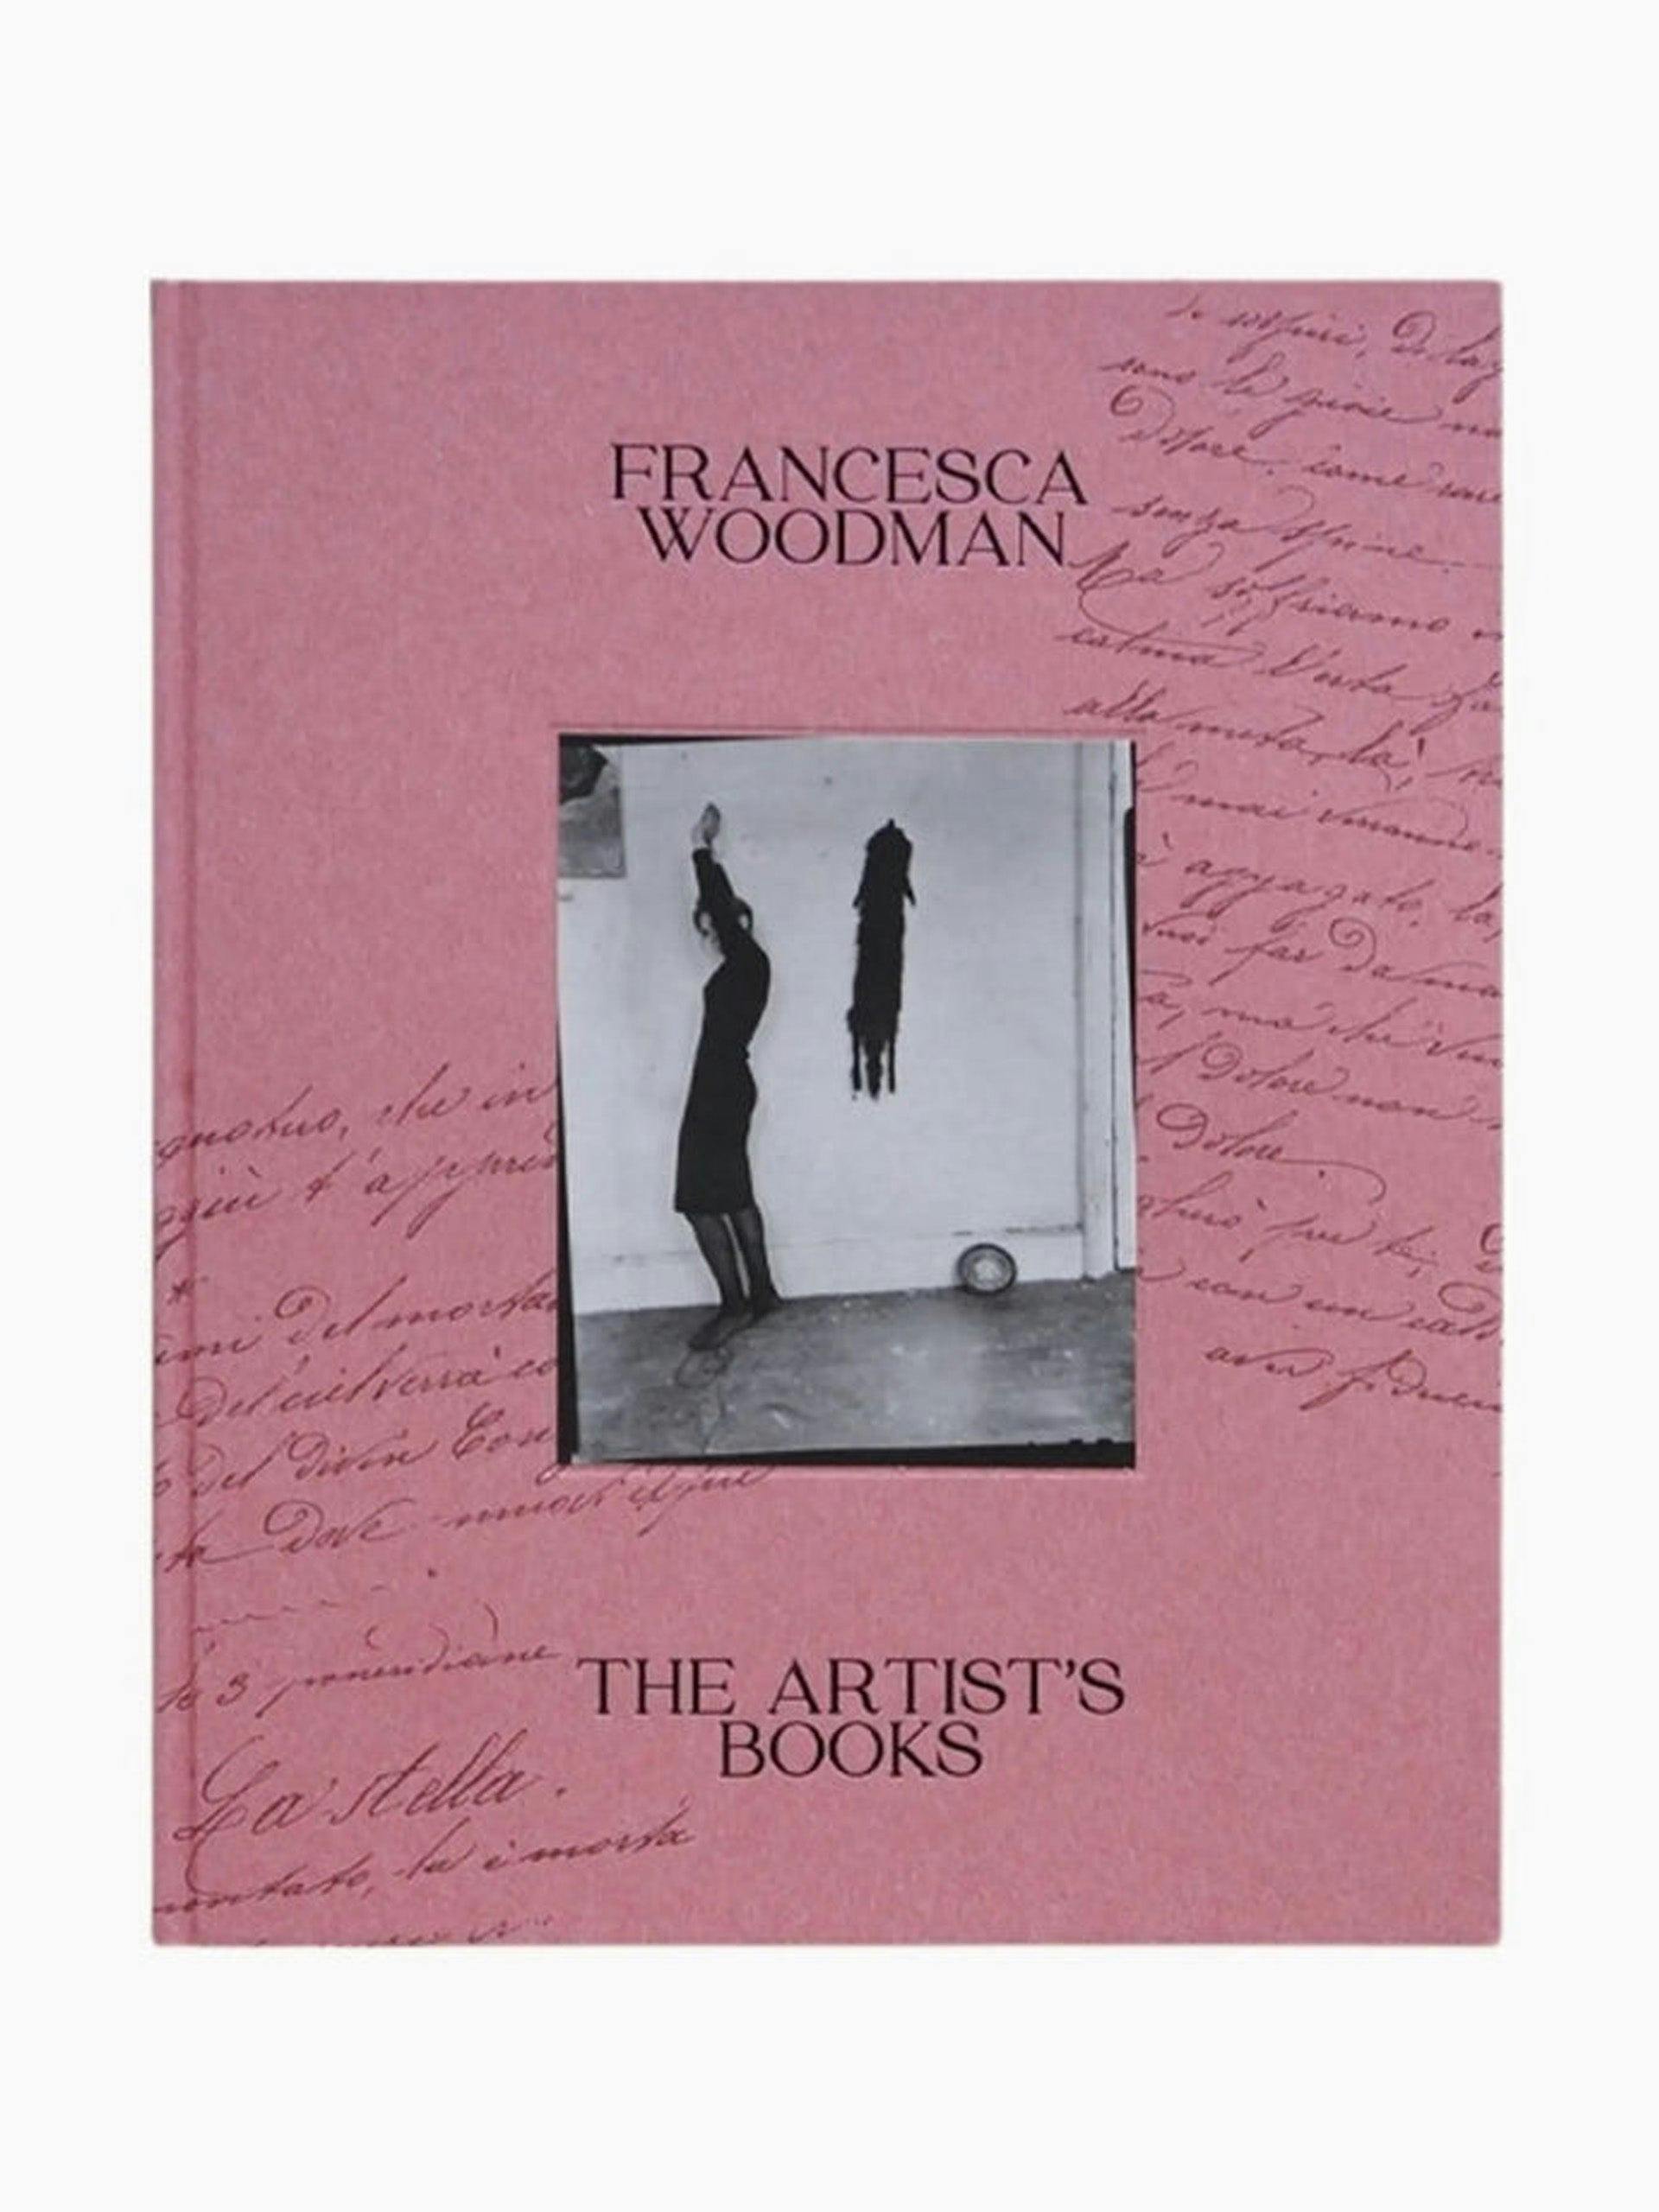 The Artist's Books: Francesca Woodman book